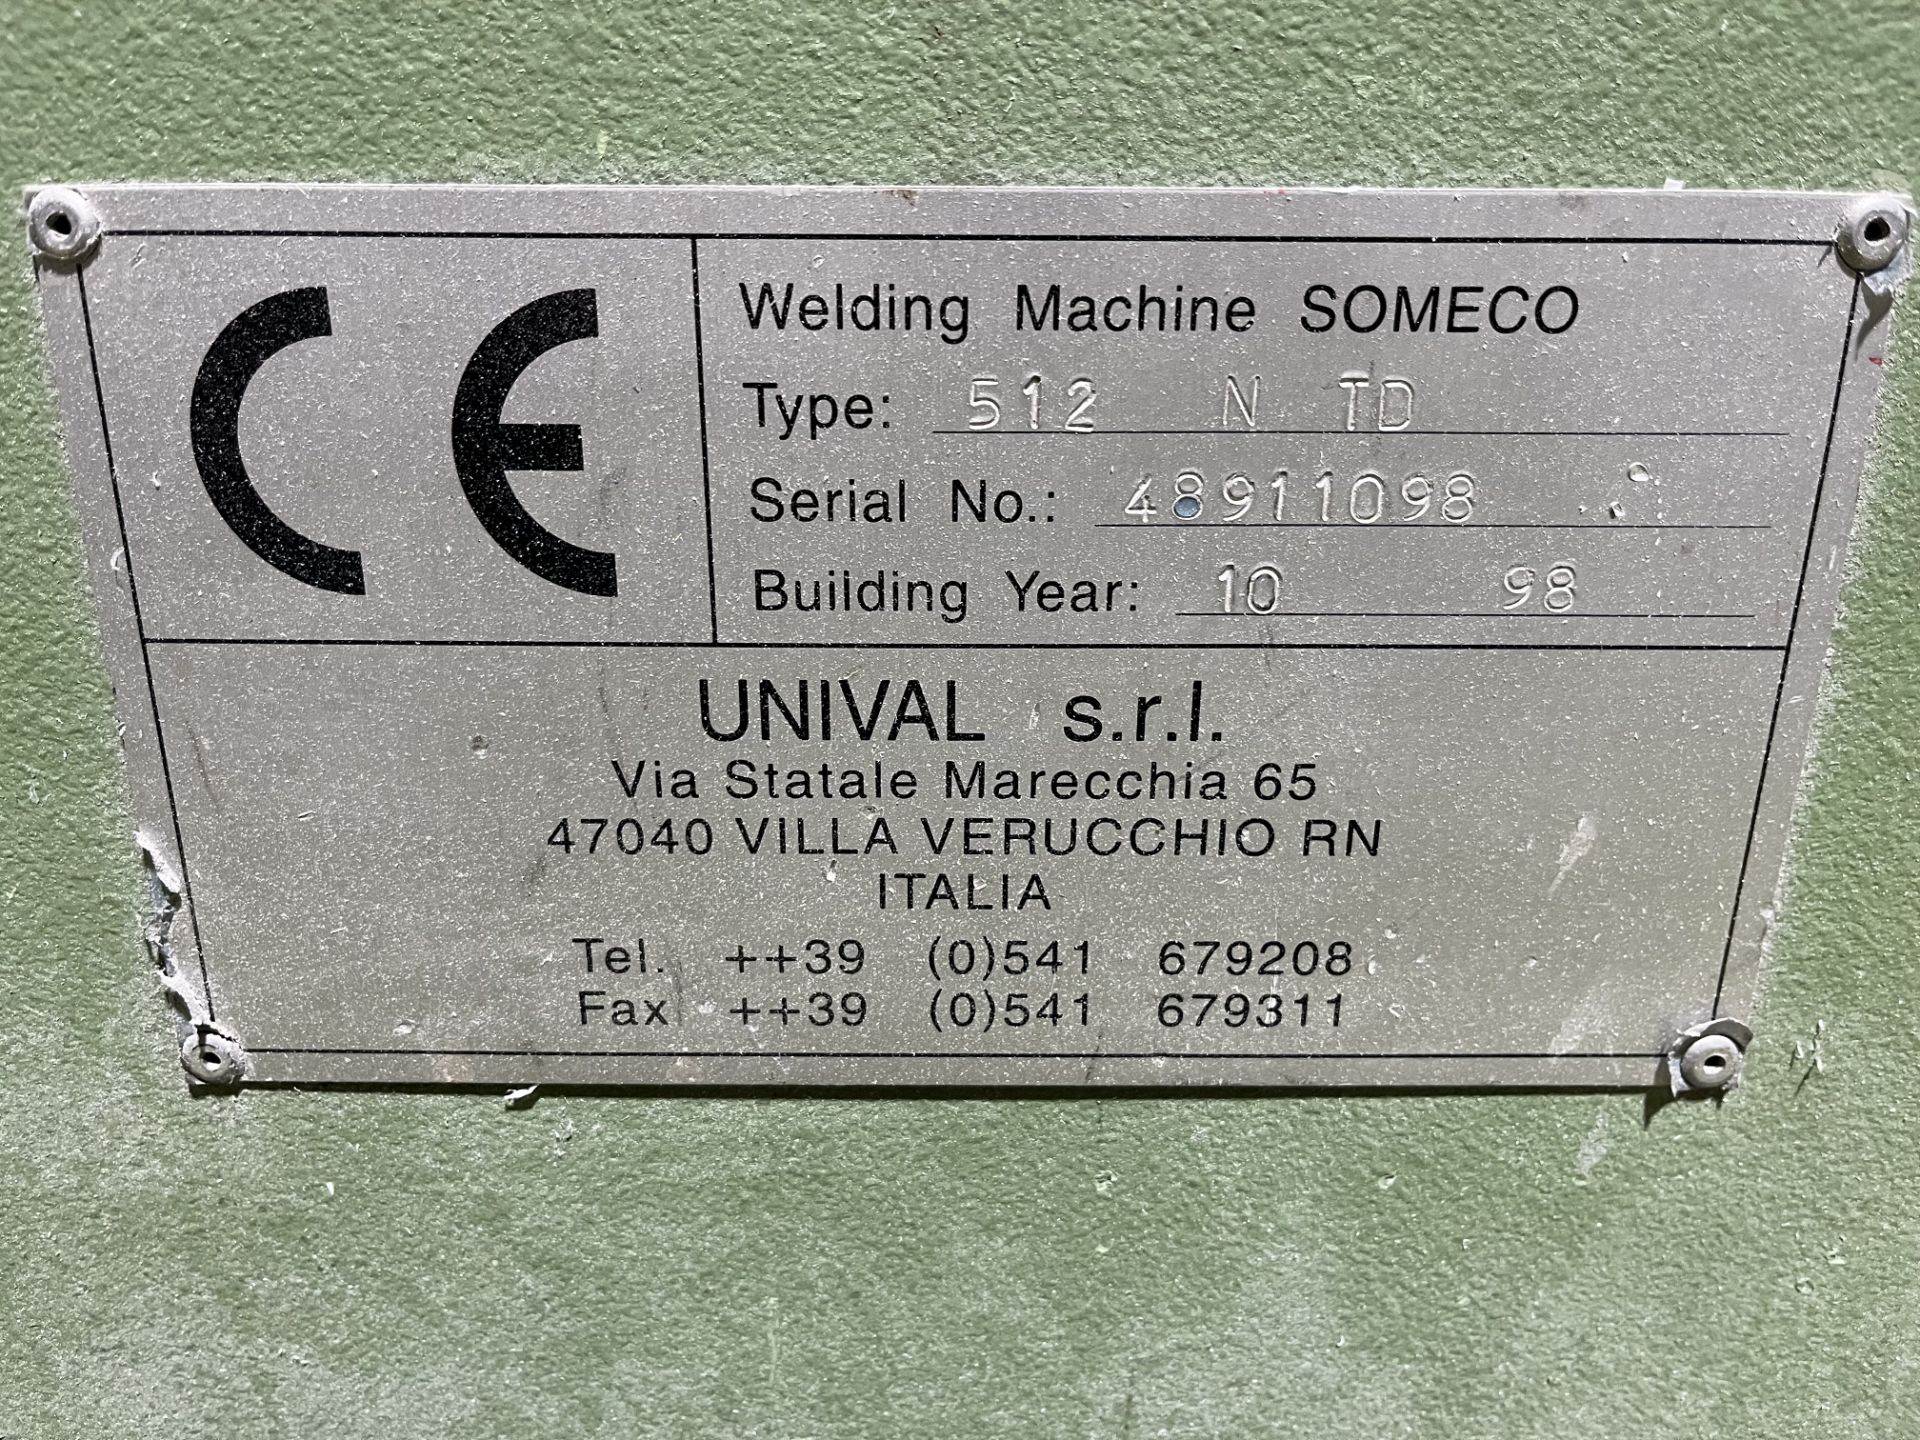 CL15 Someco 512 NTD 3 Head Welder Serial No. 48911098 (1998) - Image 2 of 2